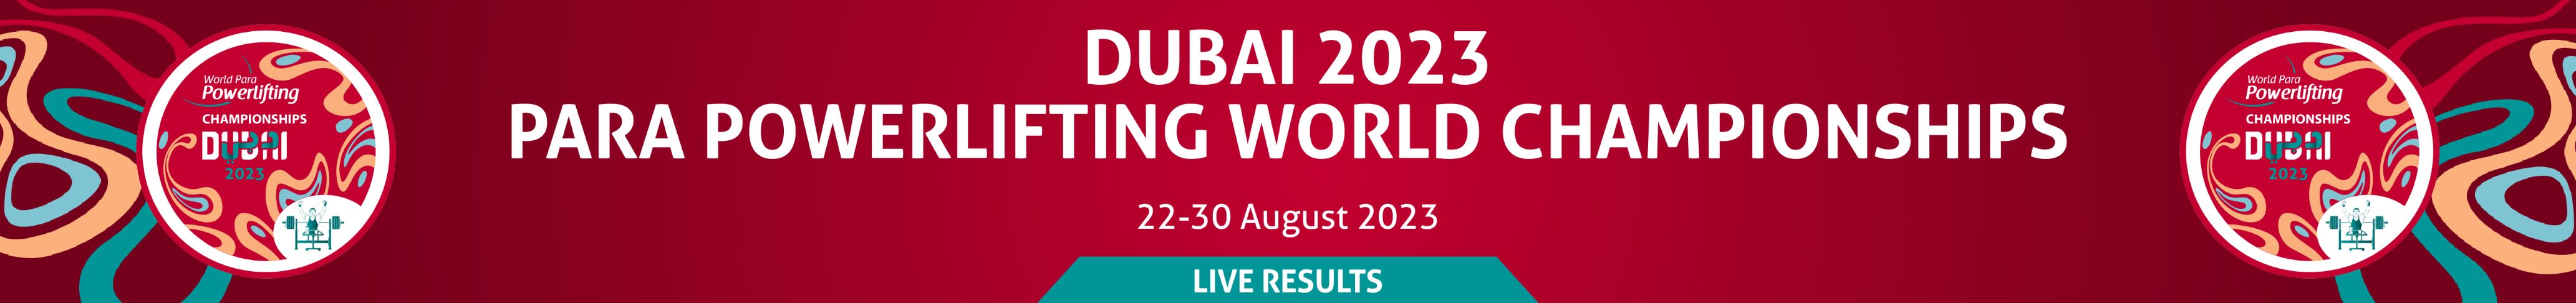 A banner of the Dubai 2023 Para Powerlifting World Championships